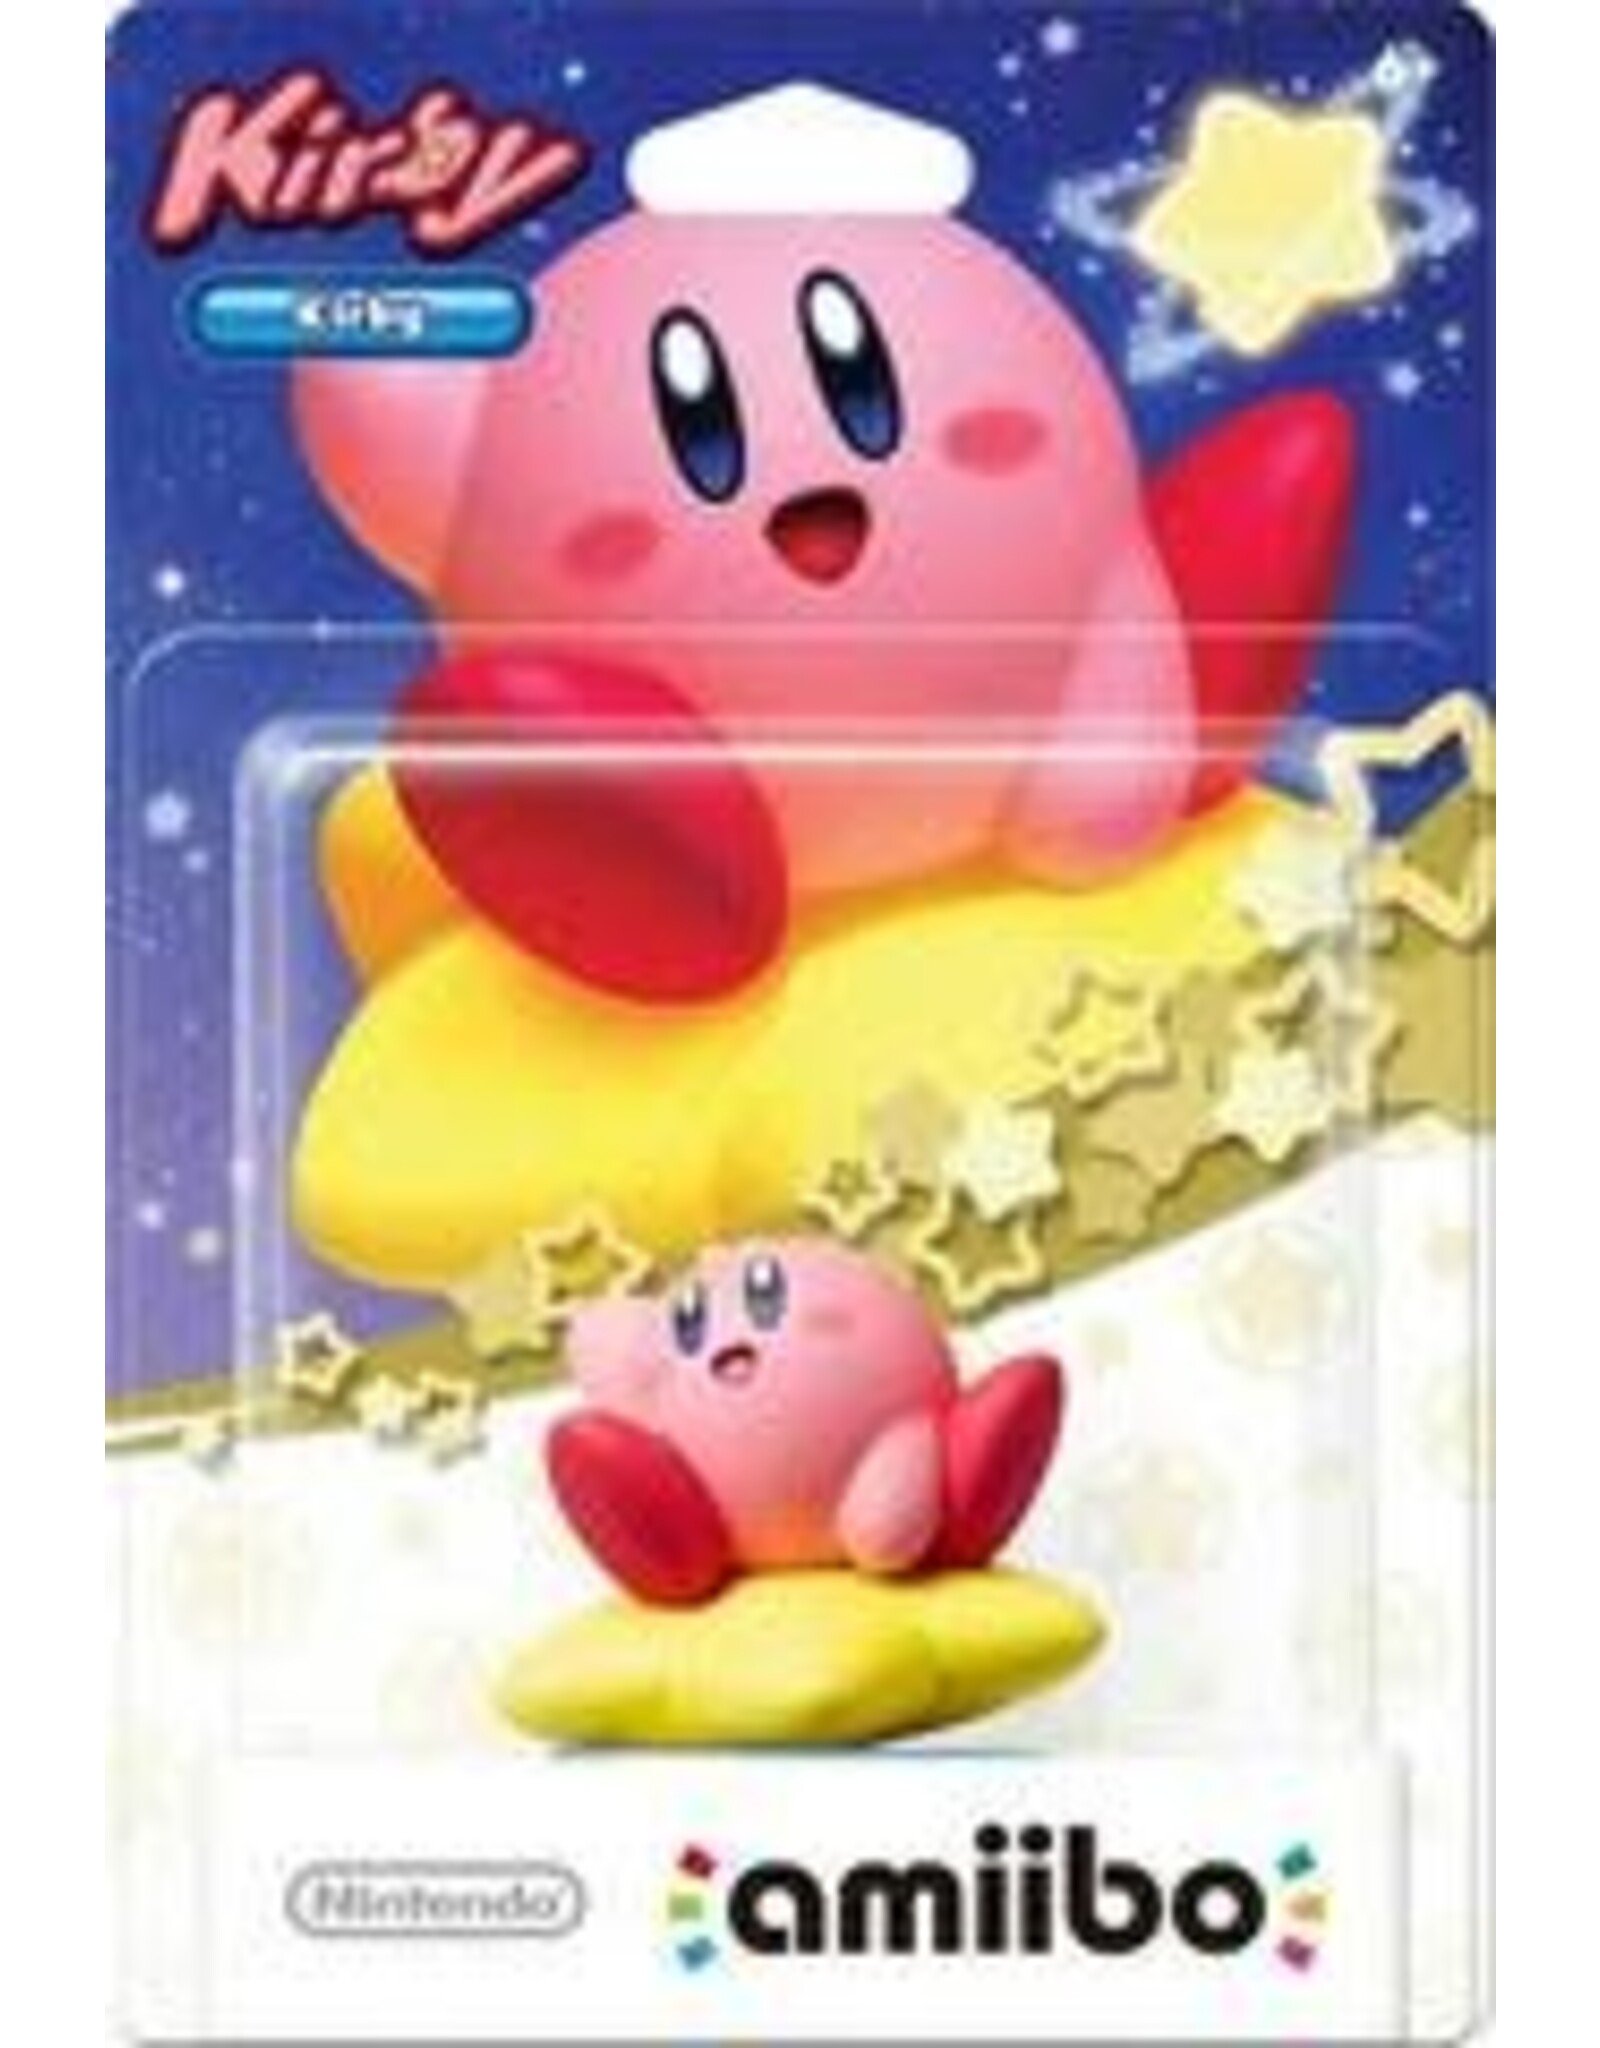 Amiibo Kirby Amiibo (Kirby)